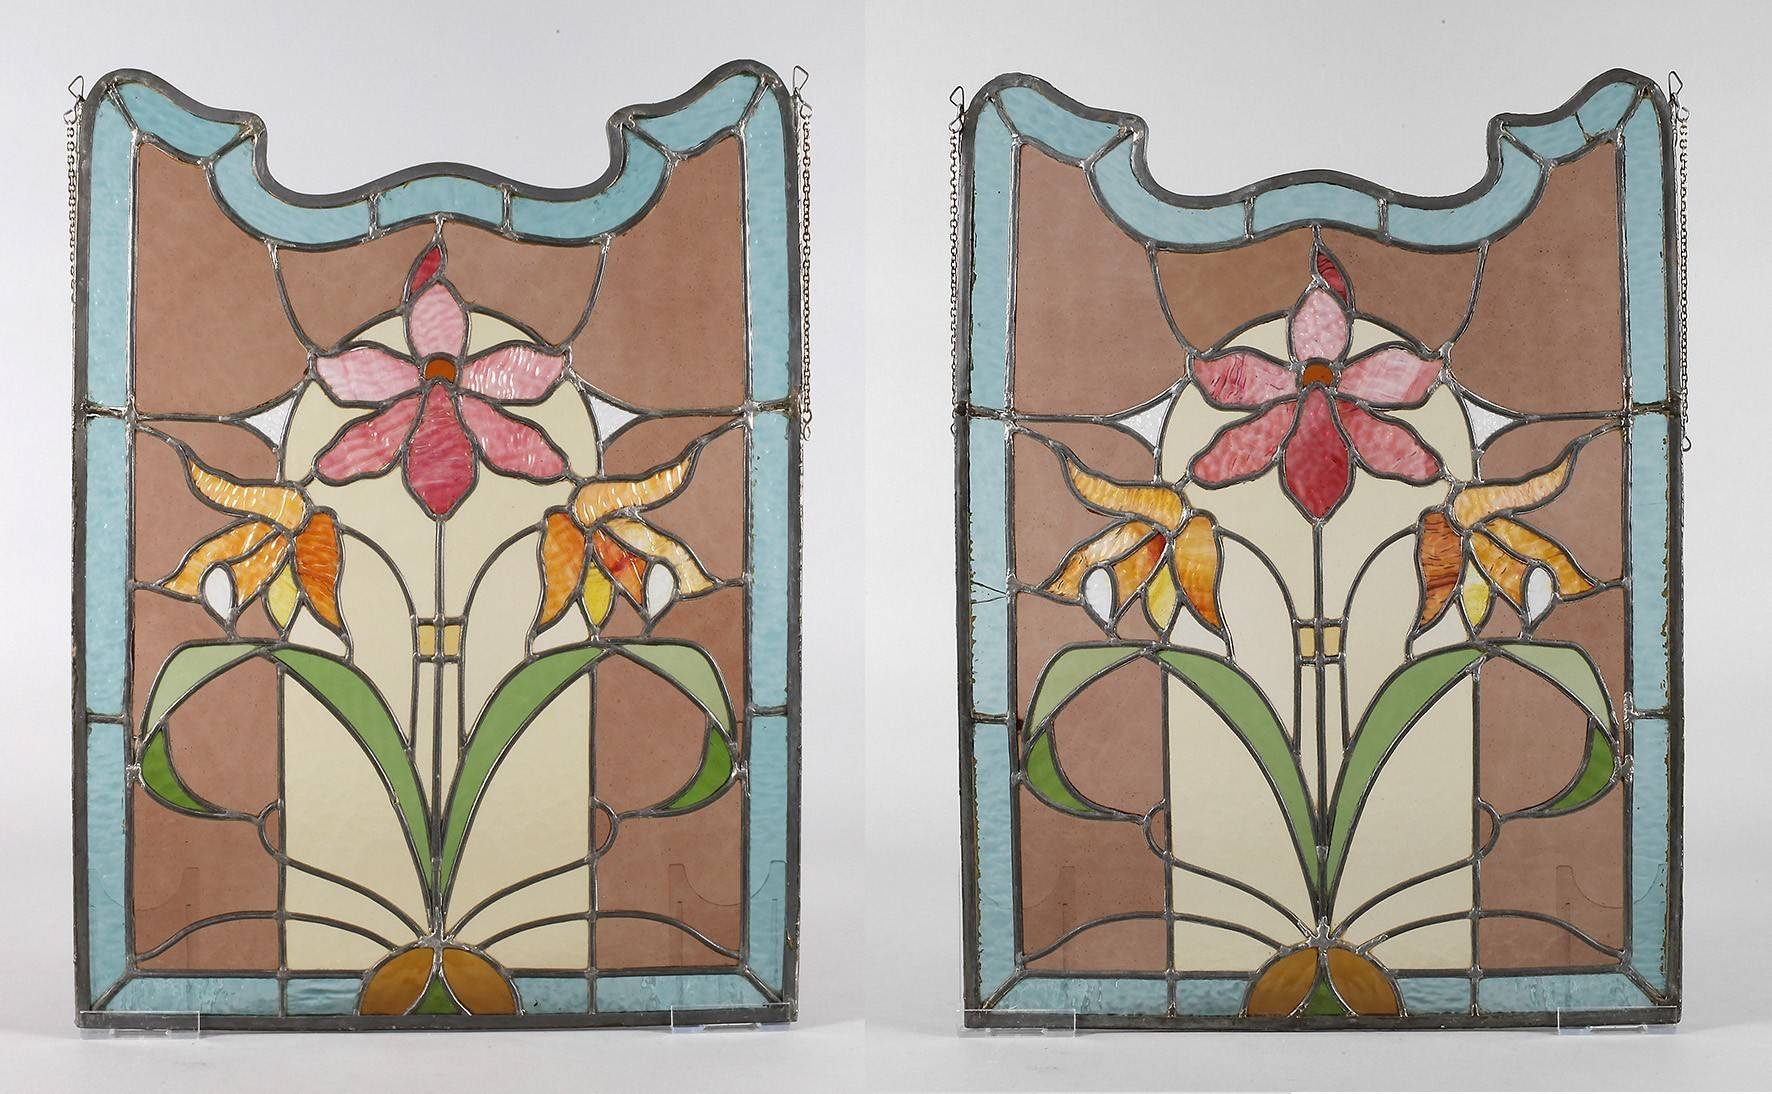 Paar florale Bleiglasscheiben Jugendstil